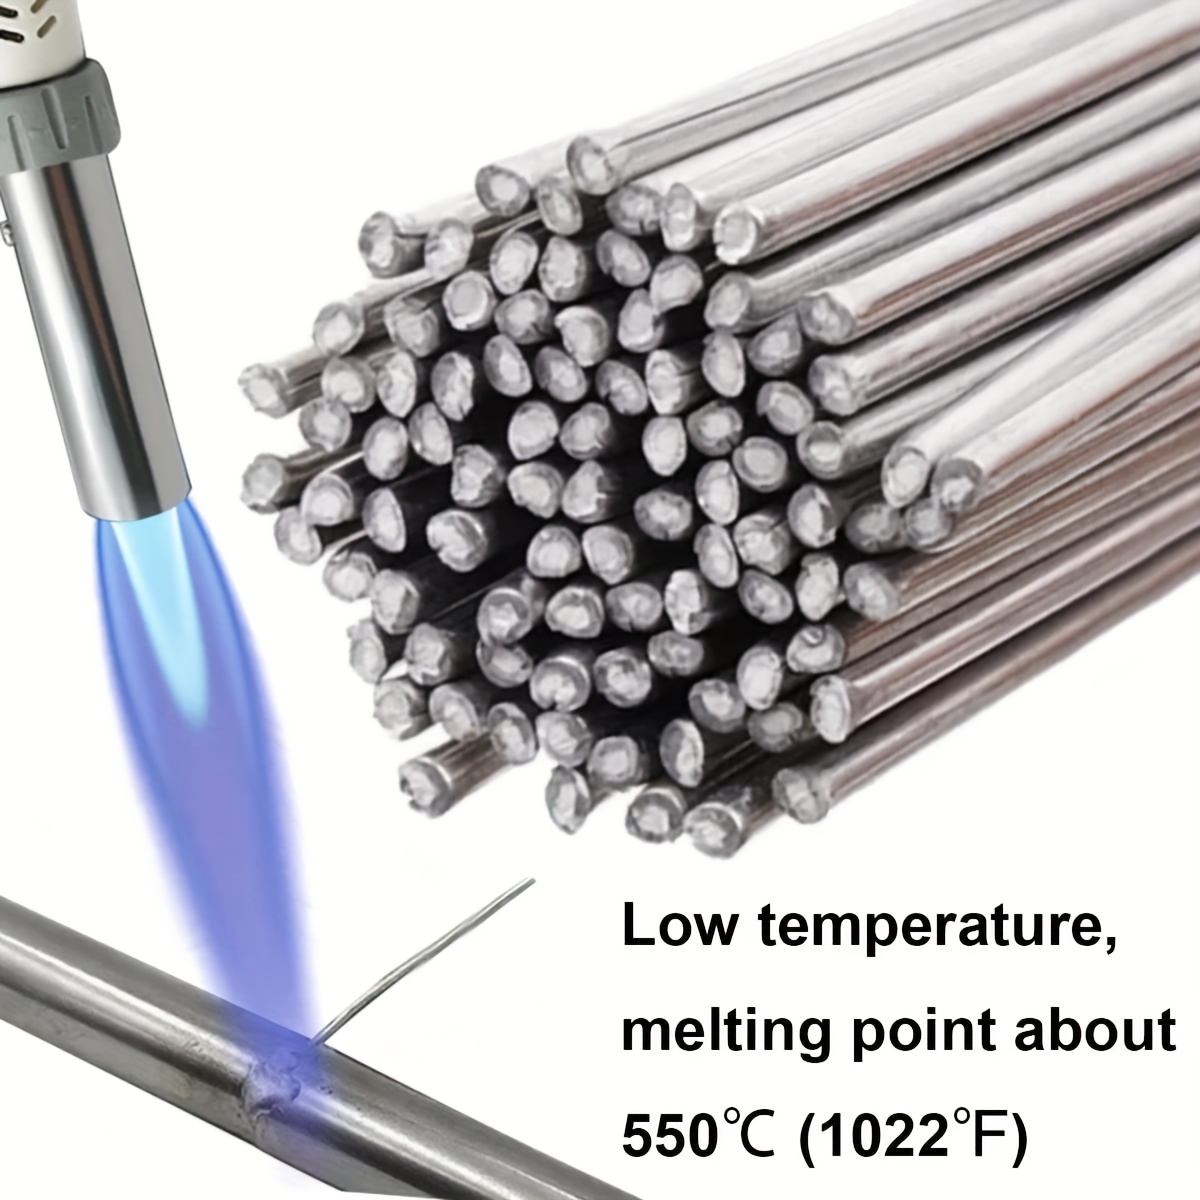 CottonCandy Copper Aluminum Welding Rods,Low Temperature Welding